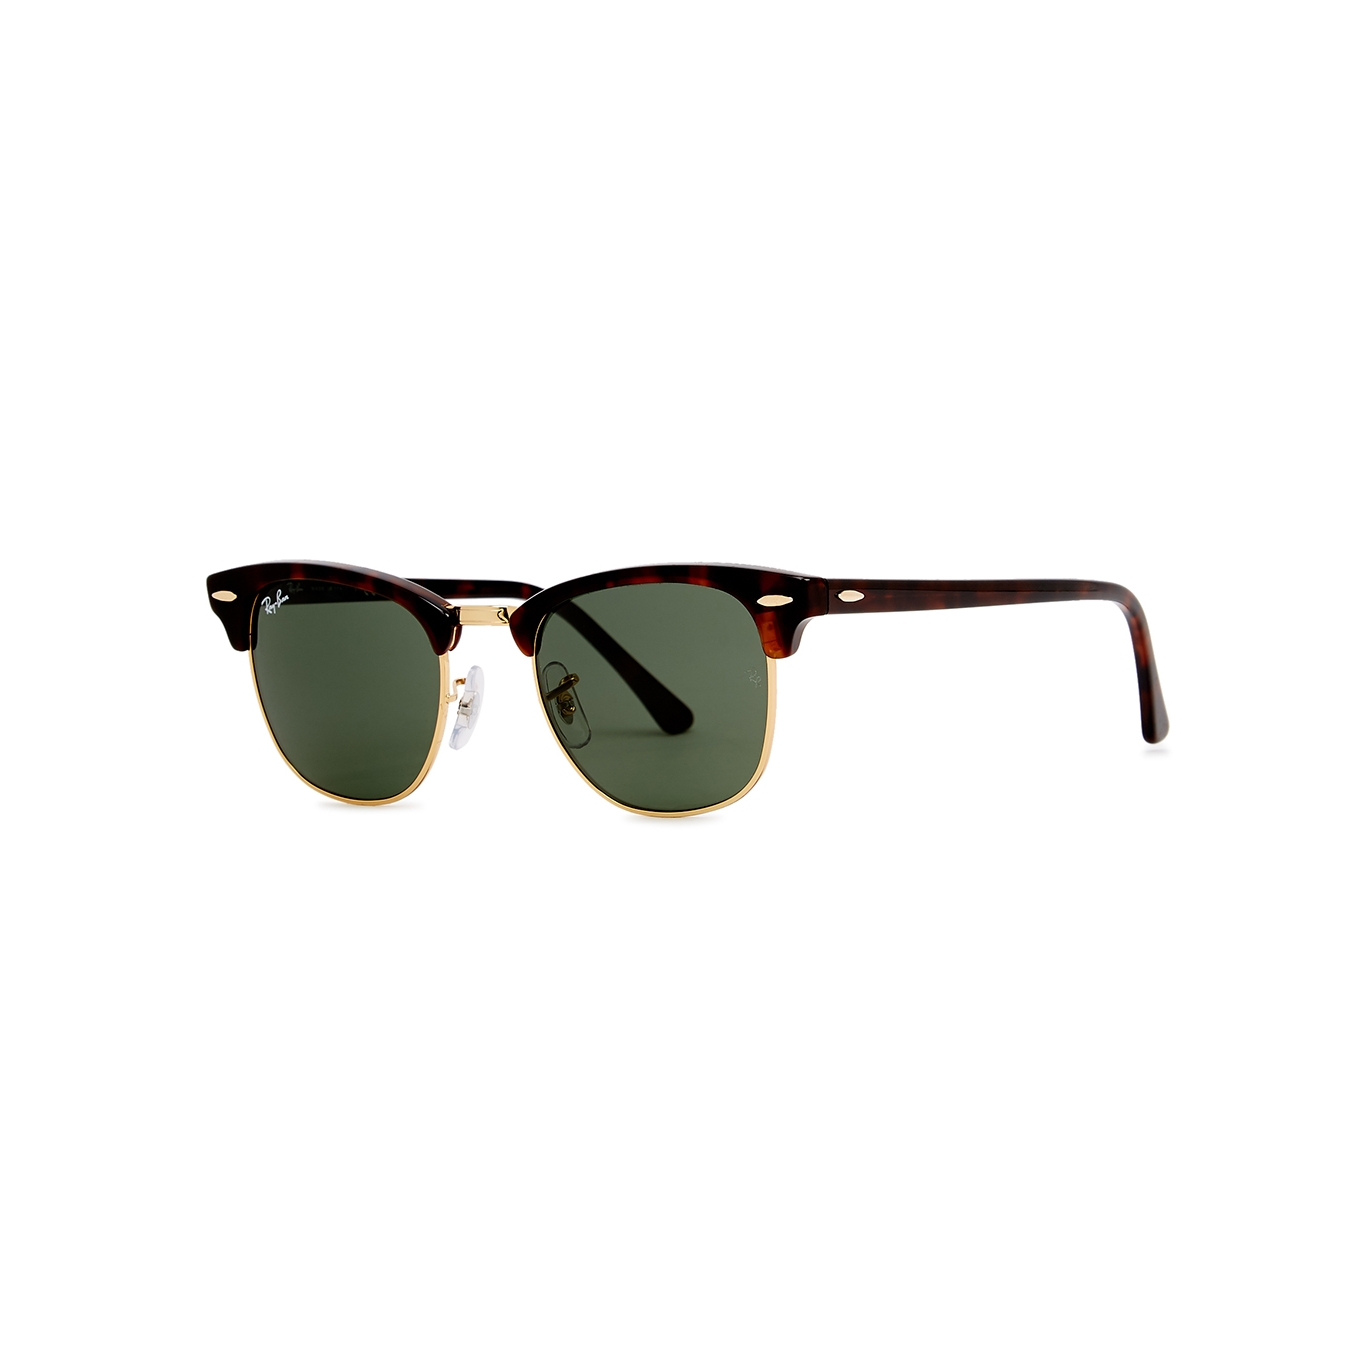 Ray-Ban Tortoiseshell Clubmaster Sunglasses, Sunglasses, Brown